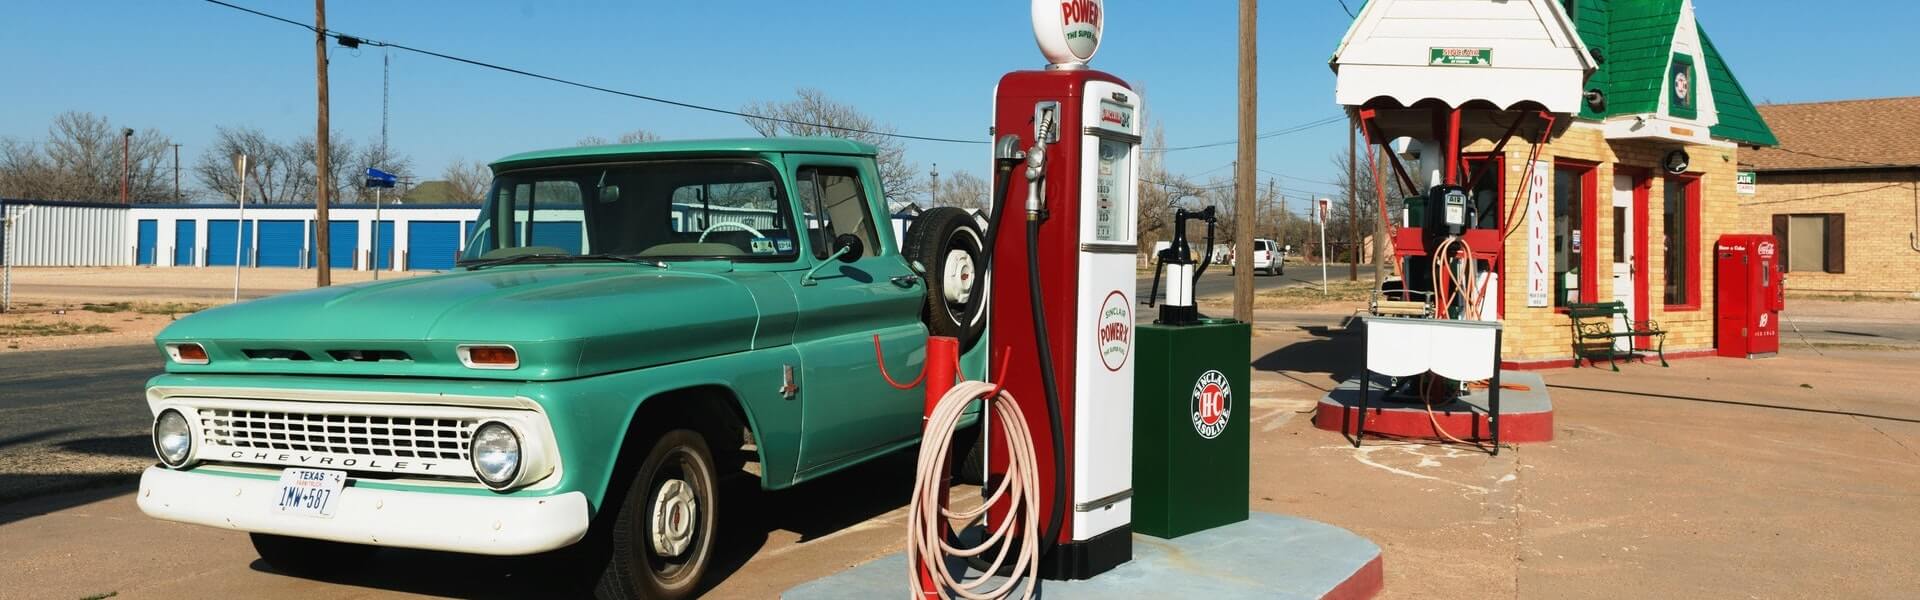 Self-service petrol stations hit a roadblock in New Jersey